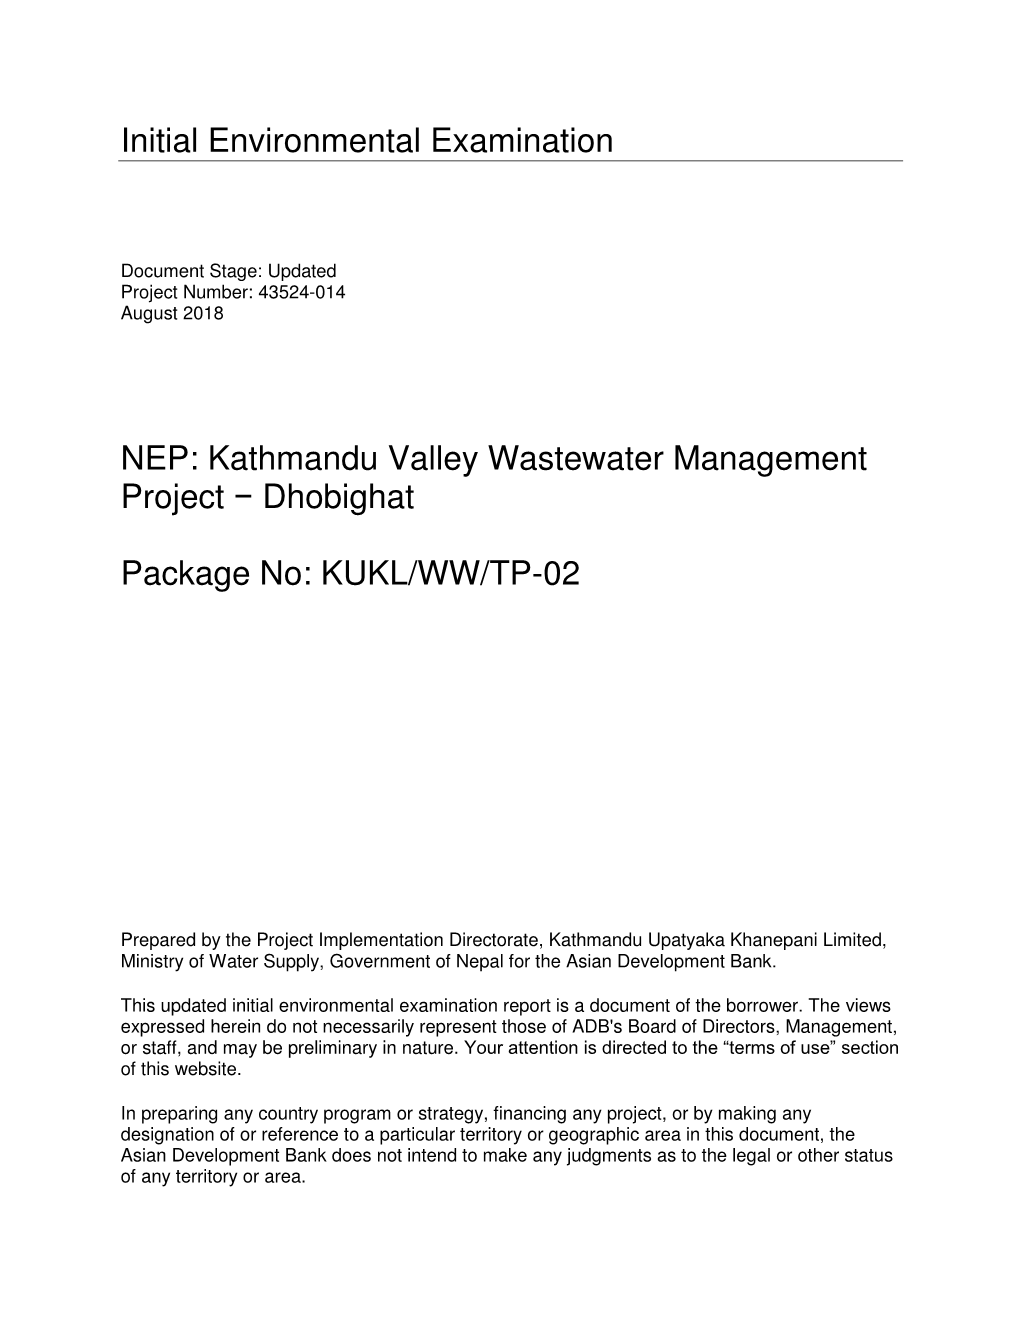 43524-014: Kathmandu Valley Wastewater Management Project